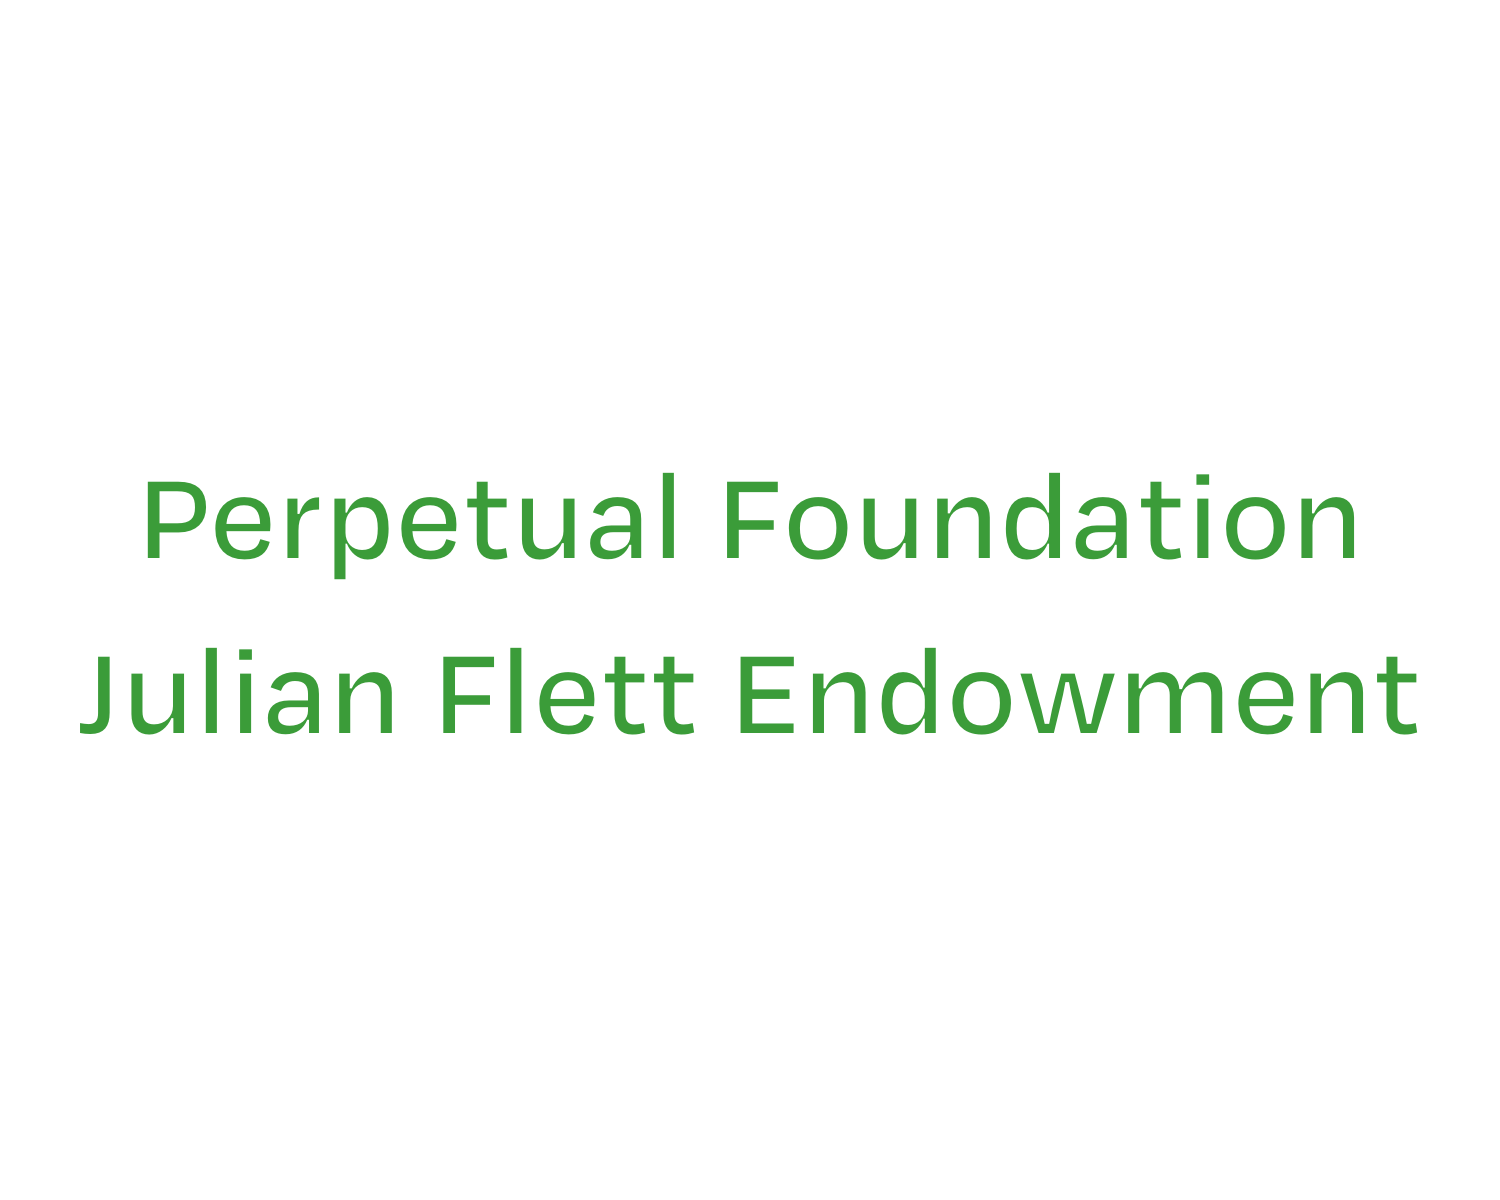 Perpetual Foundation Julian Flett Endowment